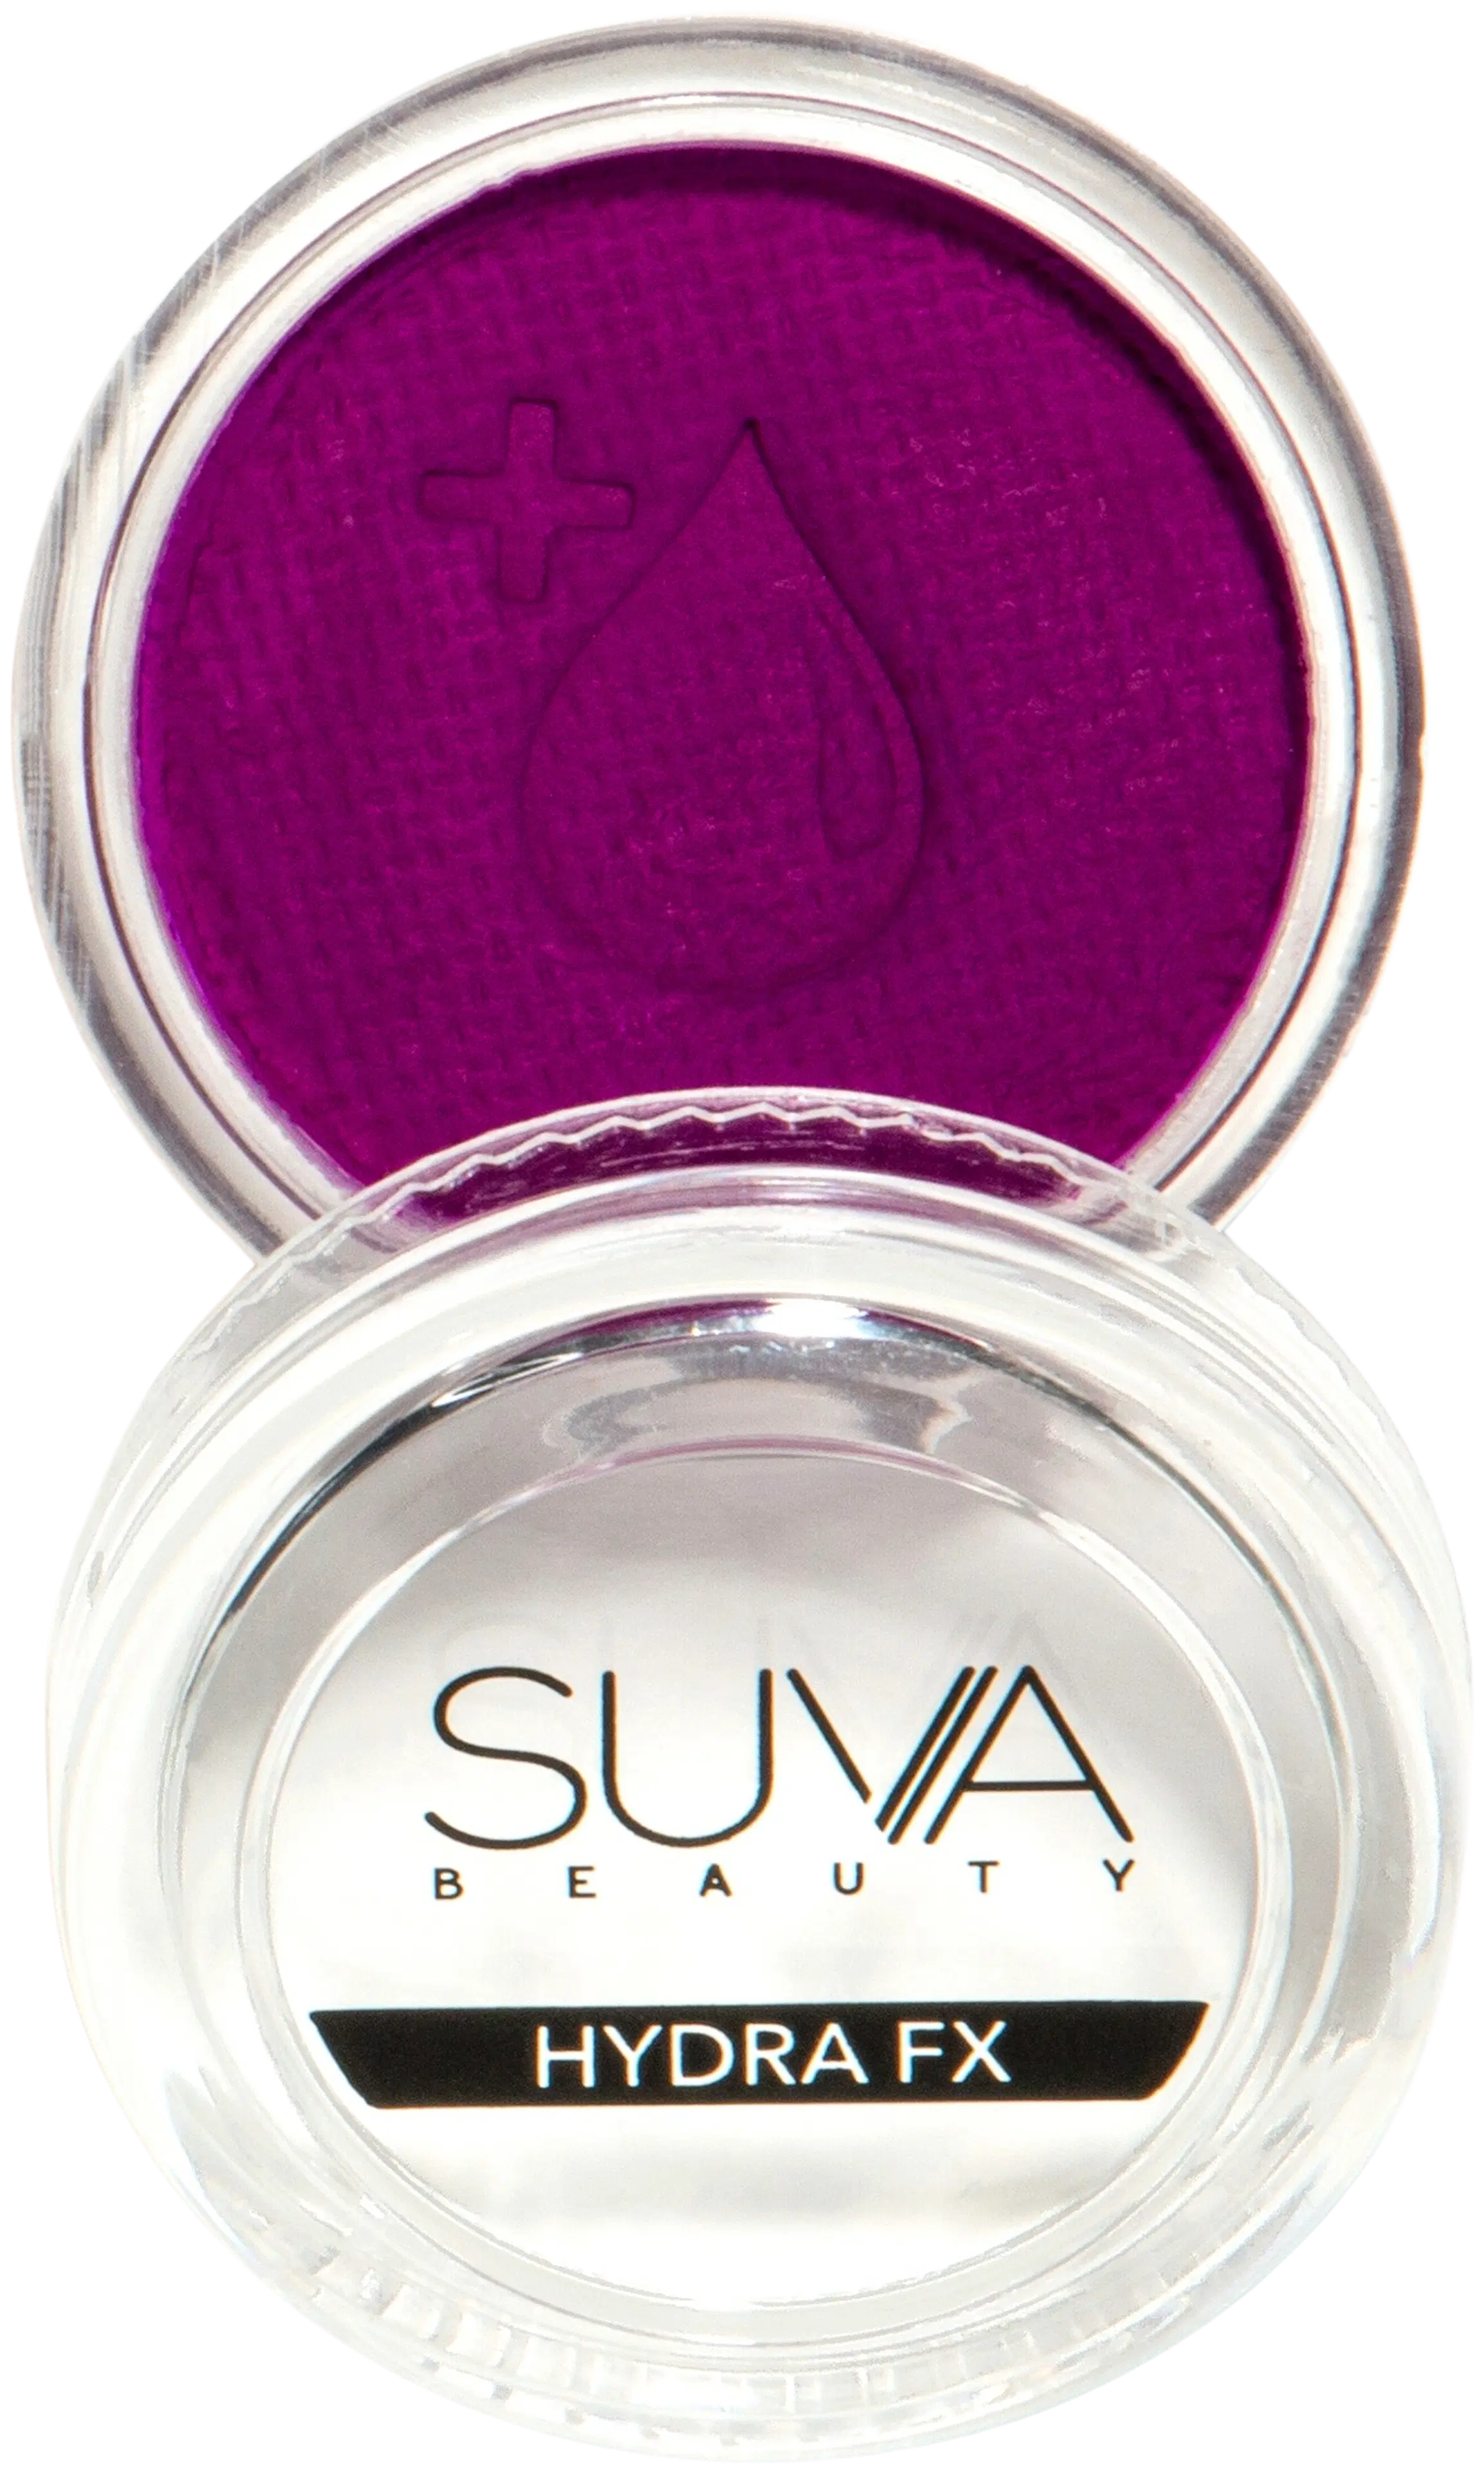 SUVA Beauty Hydra FX Grape Soda (UV) vedellä aktivoituva rajausväri